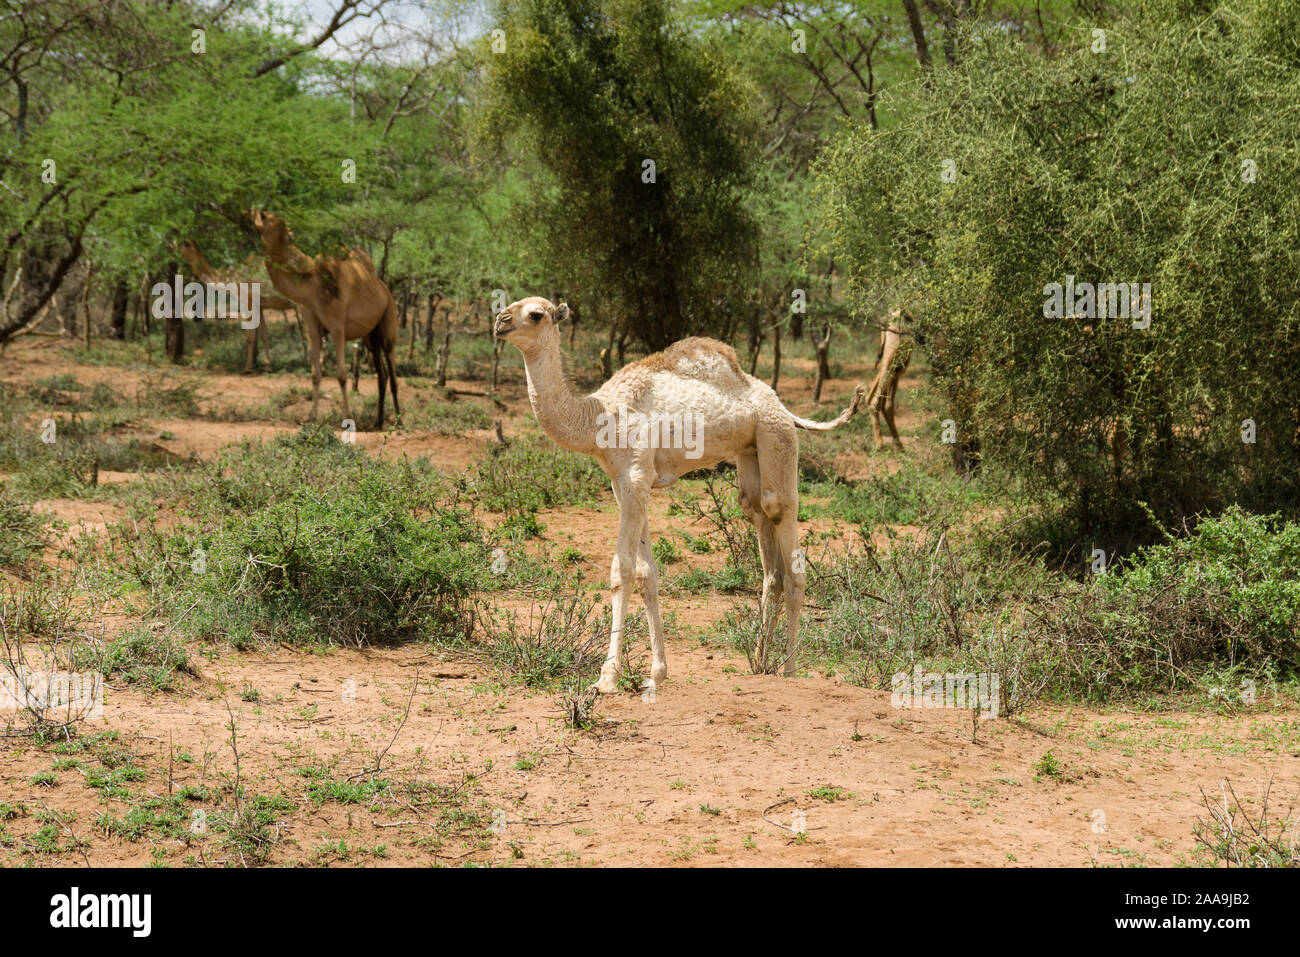 A juvenile camel (Camelus dromedarius) standing by trees, Kajiado County, Kenya Stock Photo